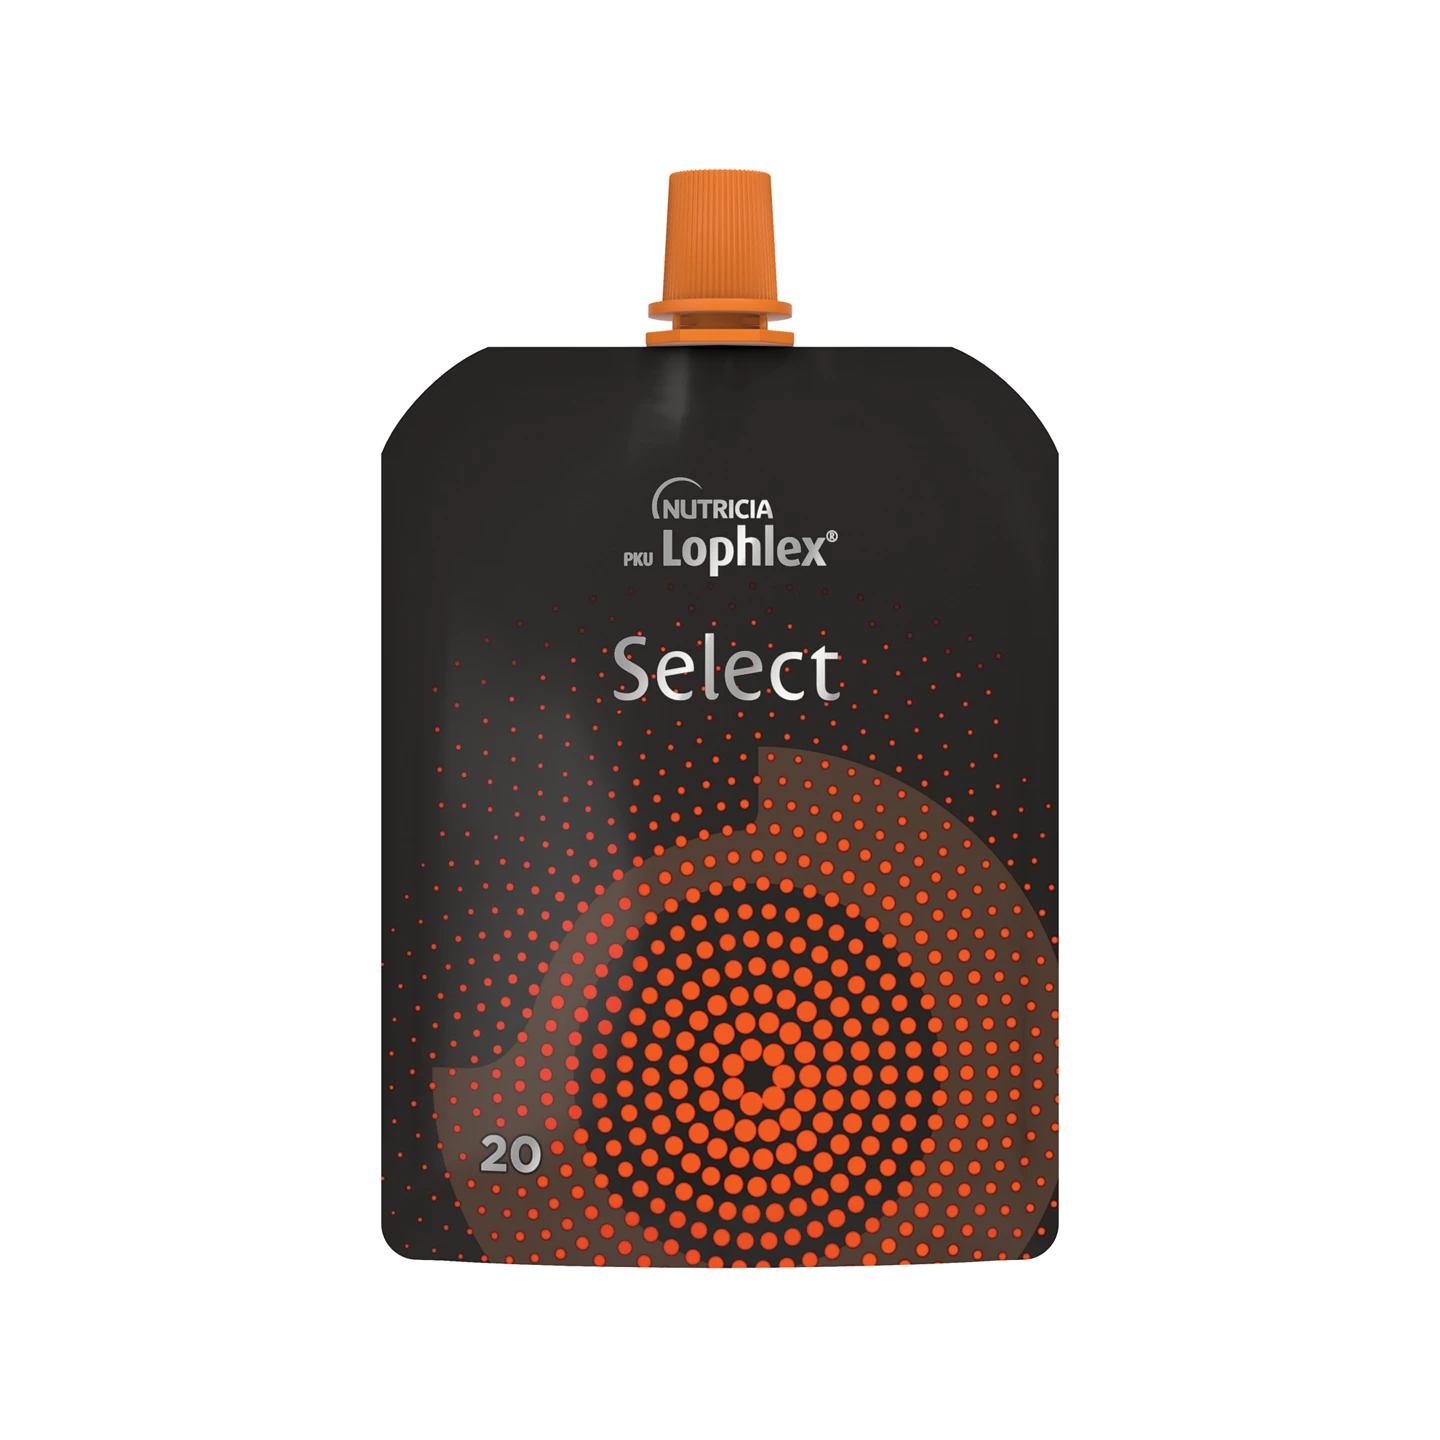 en-GB,PKU Lophlex Select 20